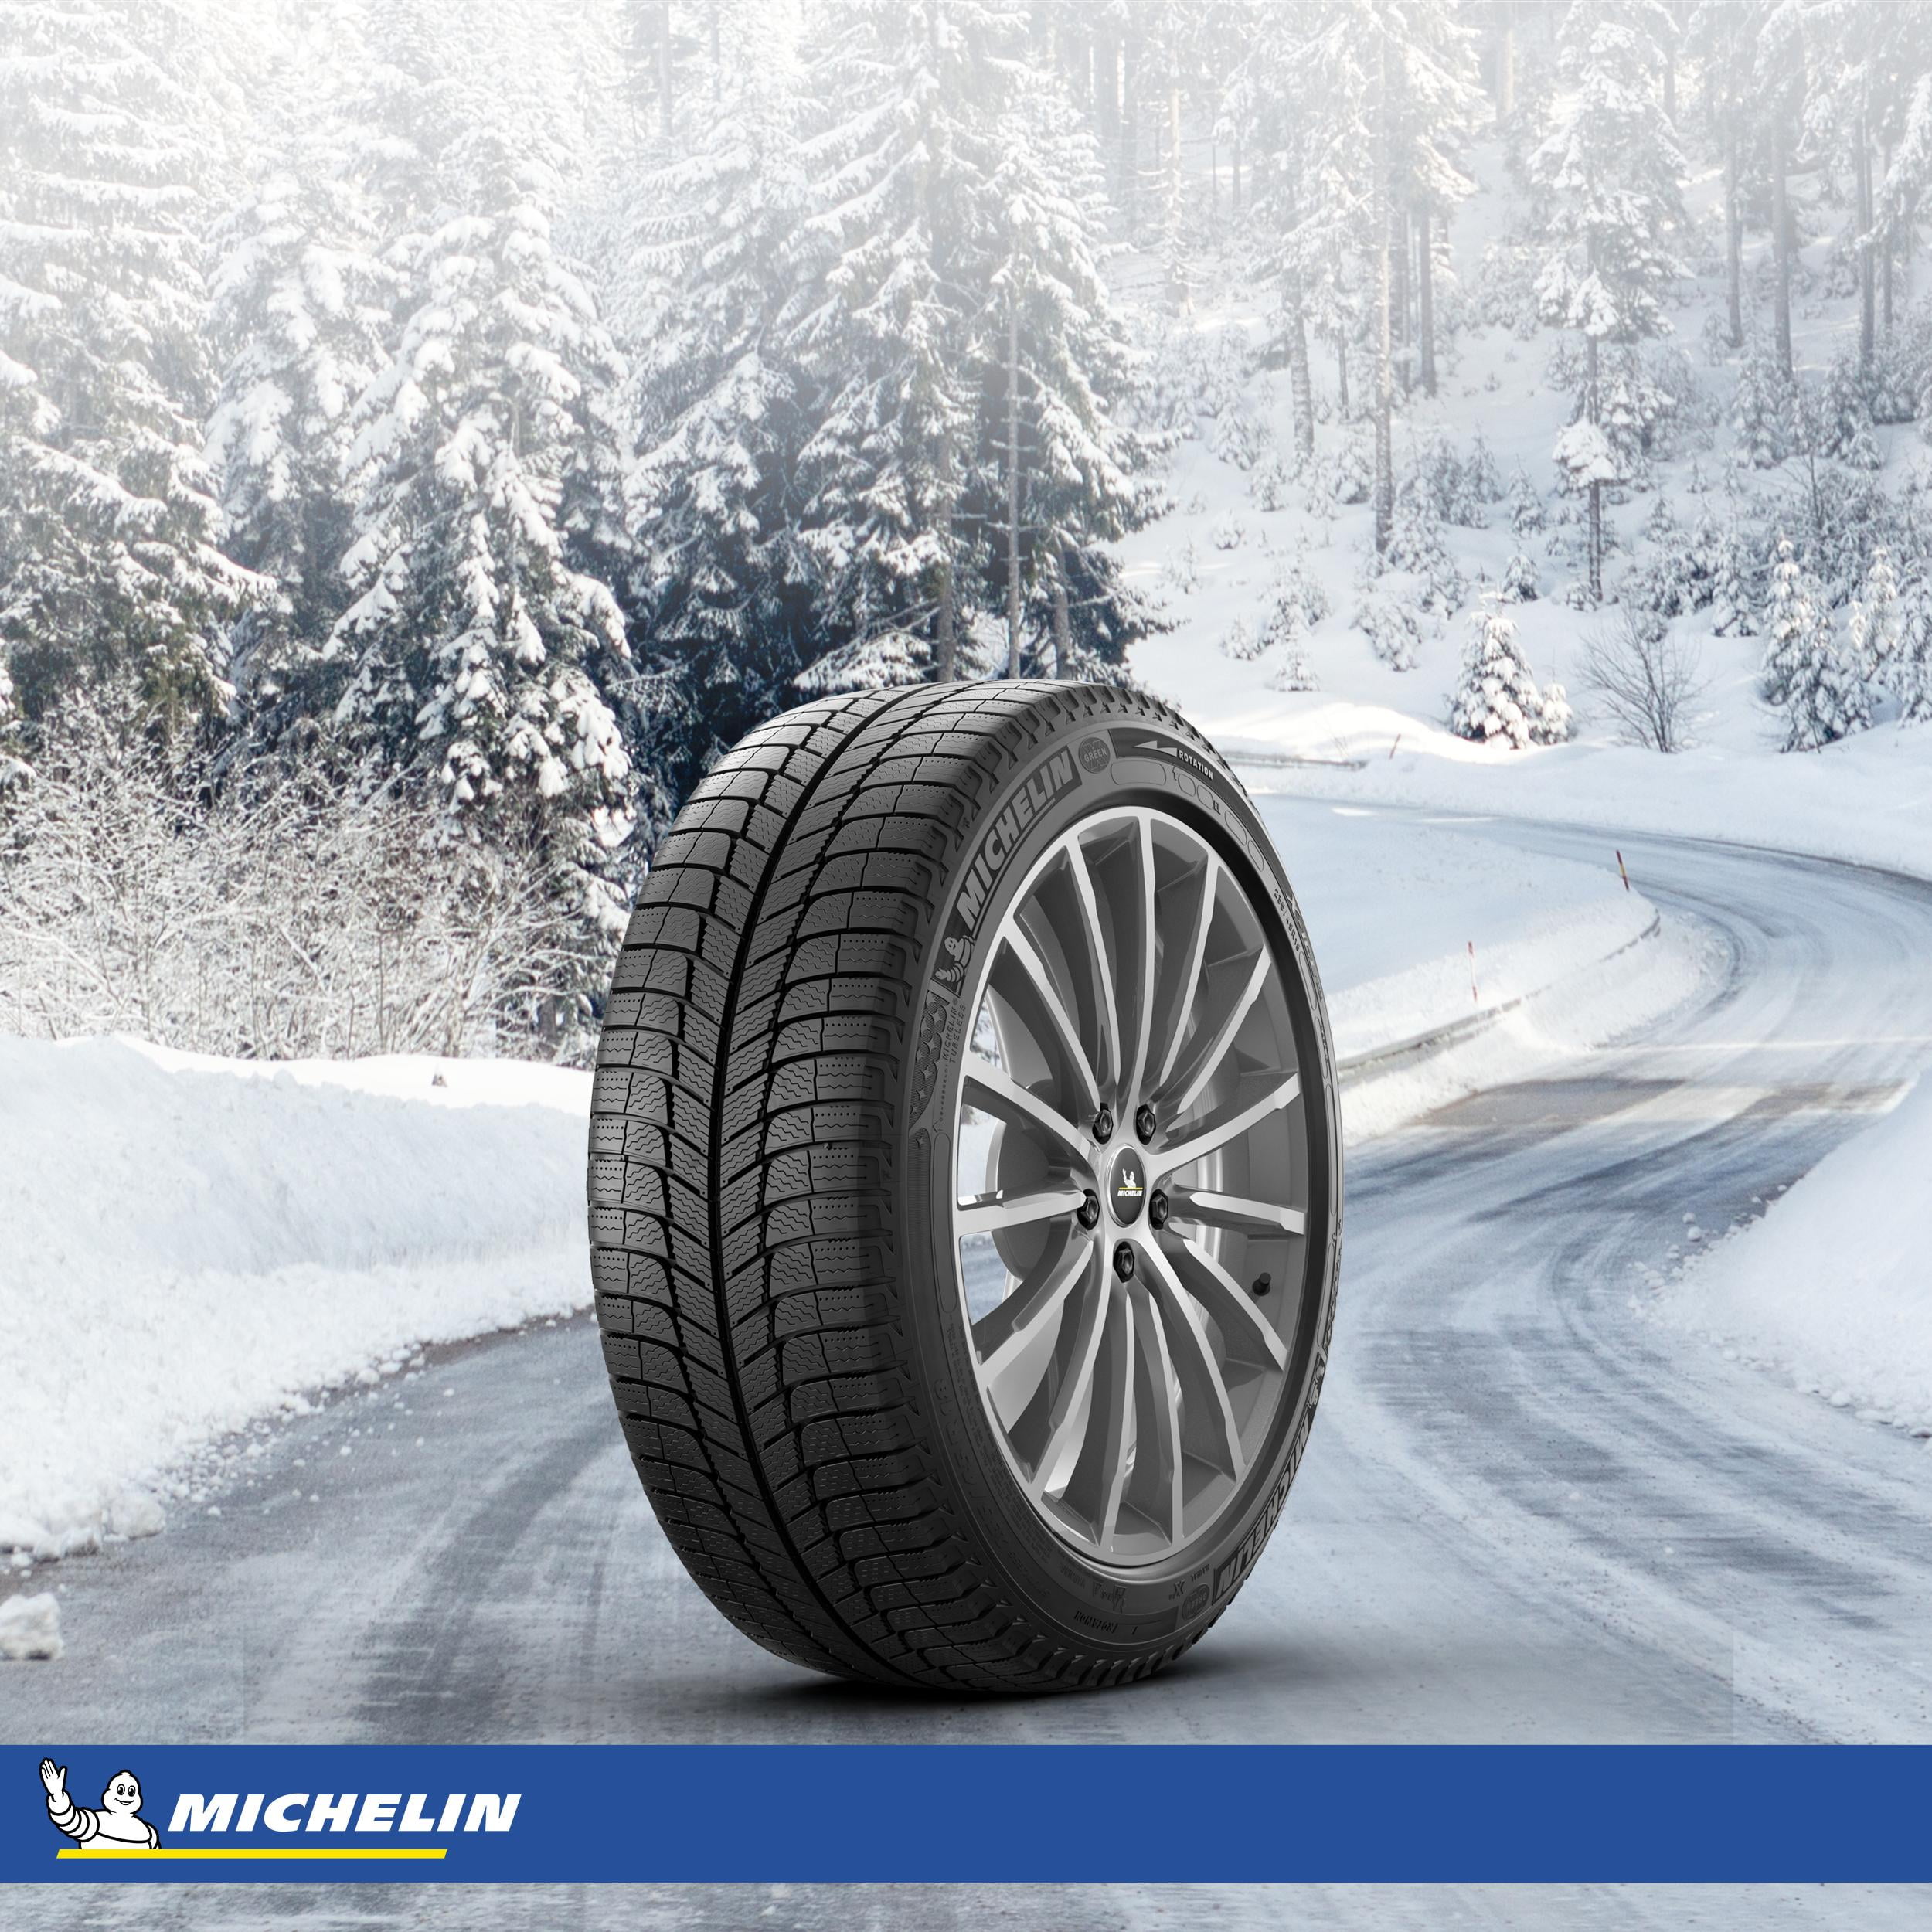 Michelin X-Ice Xi3 Winter 205/60R16 96H XL Passenger Tire 